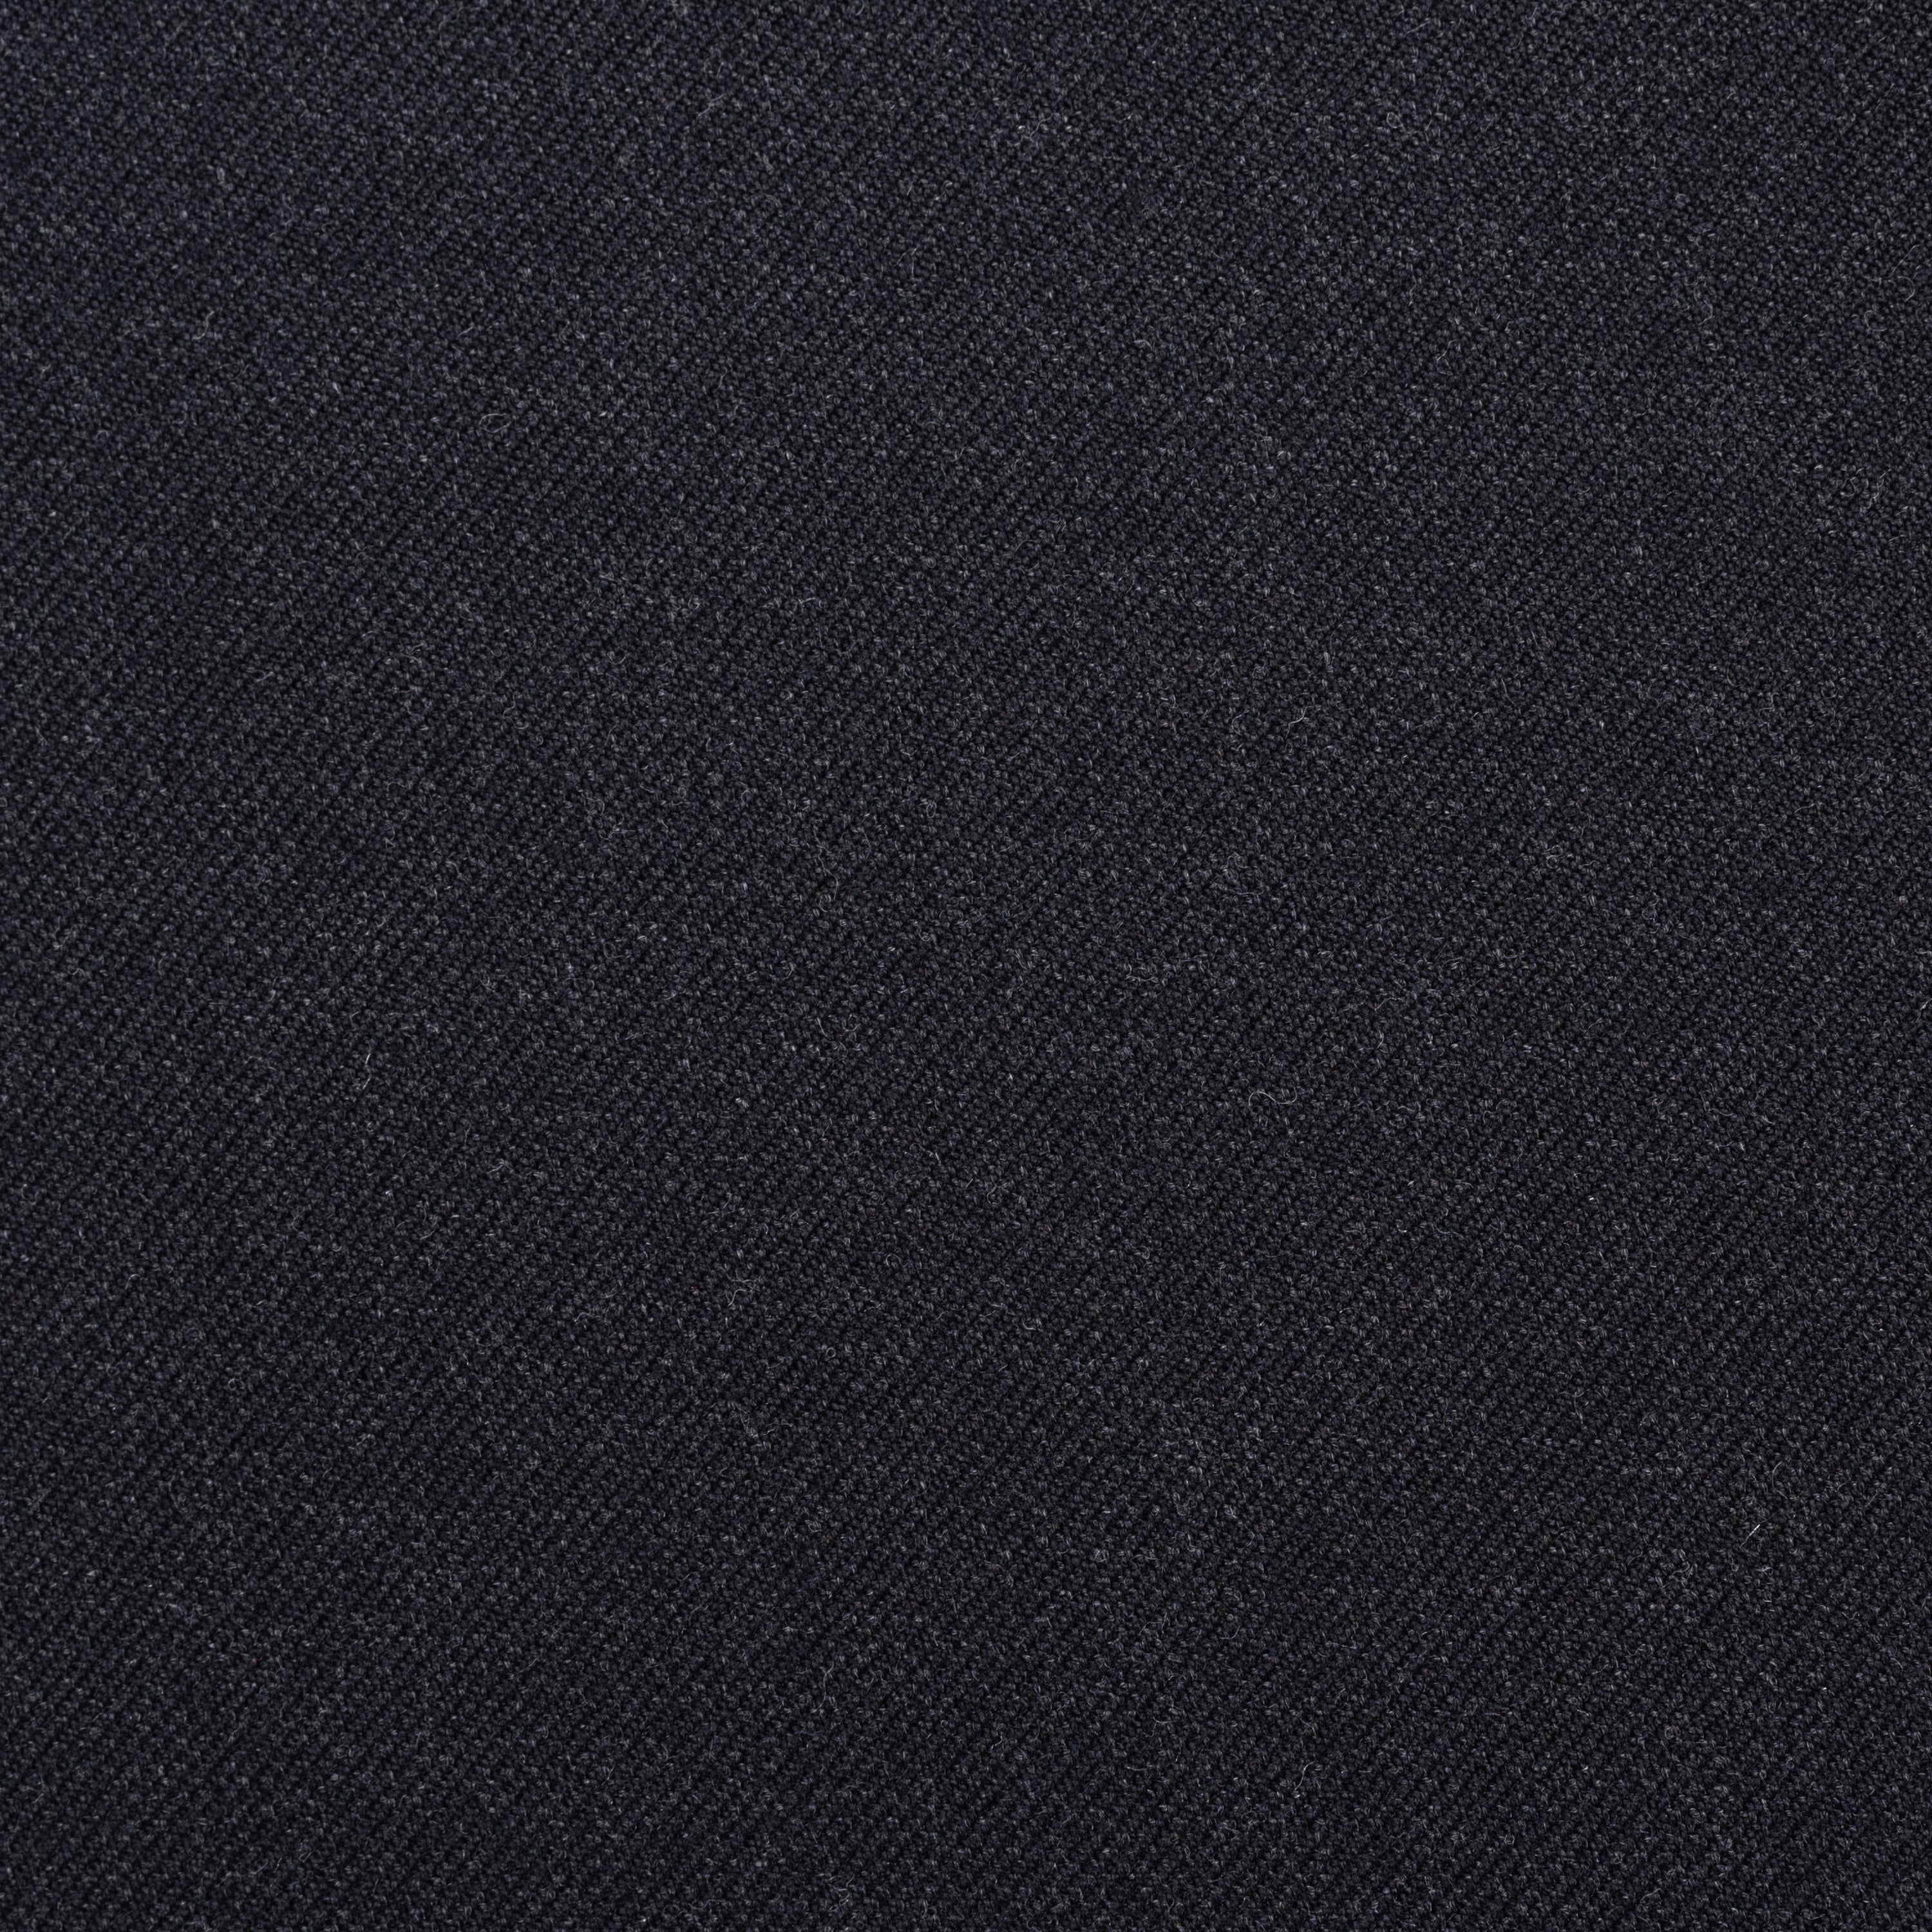 CASTANGIA 1850 Charcoal Gray Wool-Cashmere Jacket EU 54 NEW US 44